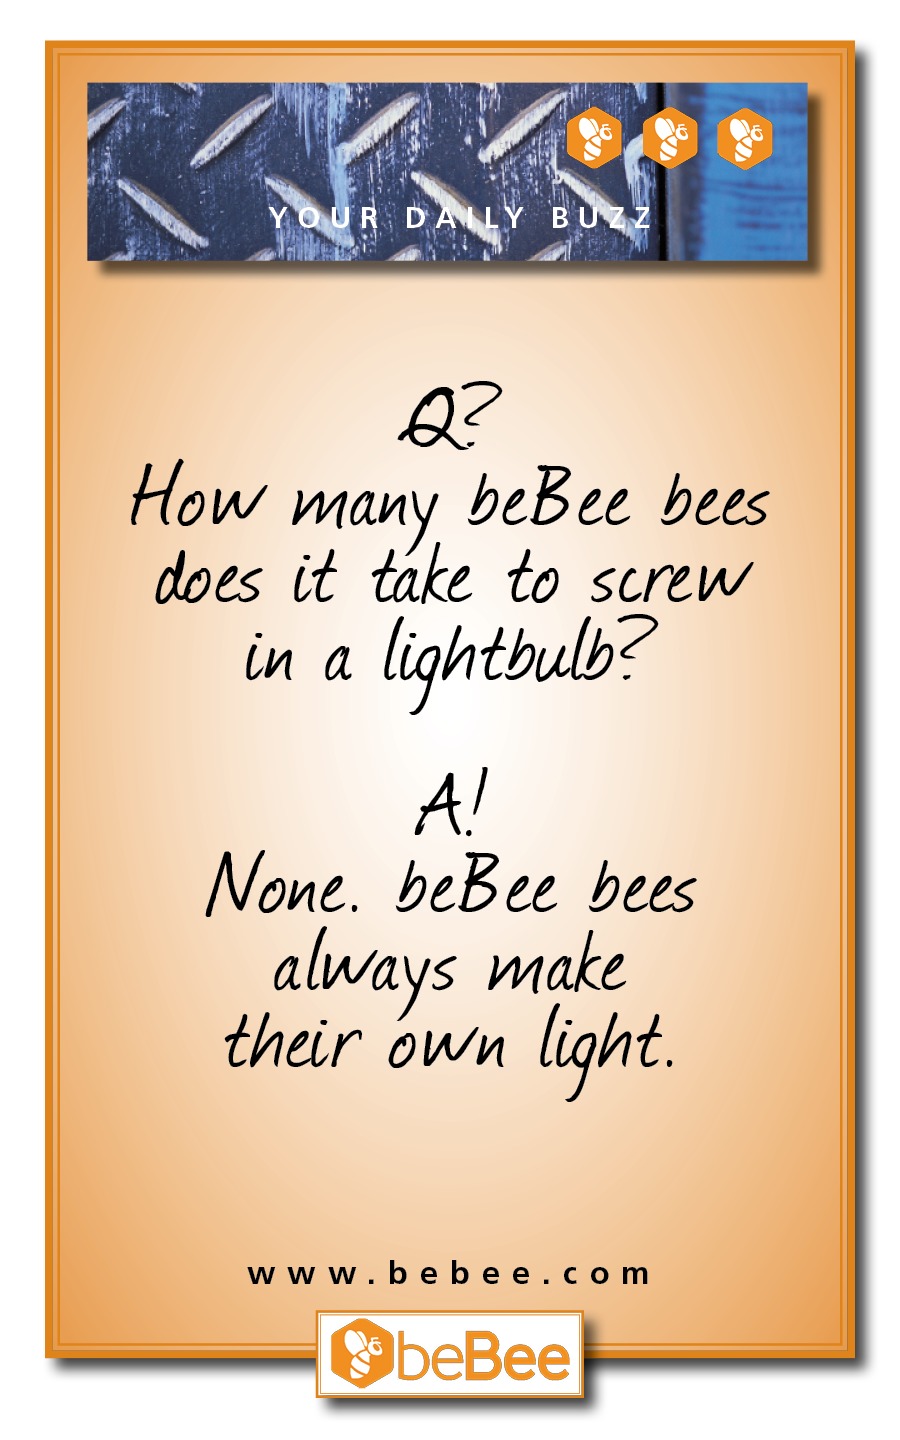 How many beBee bees
does it take to screw
in a lightbulbs

Al
None. beBee bees
always wake
their own light

www.bebee.com